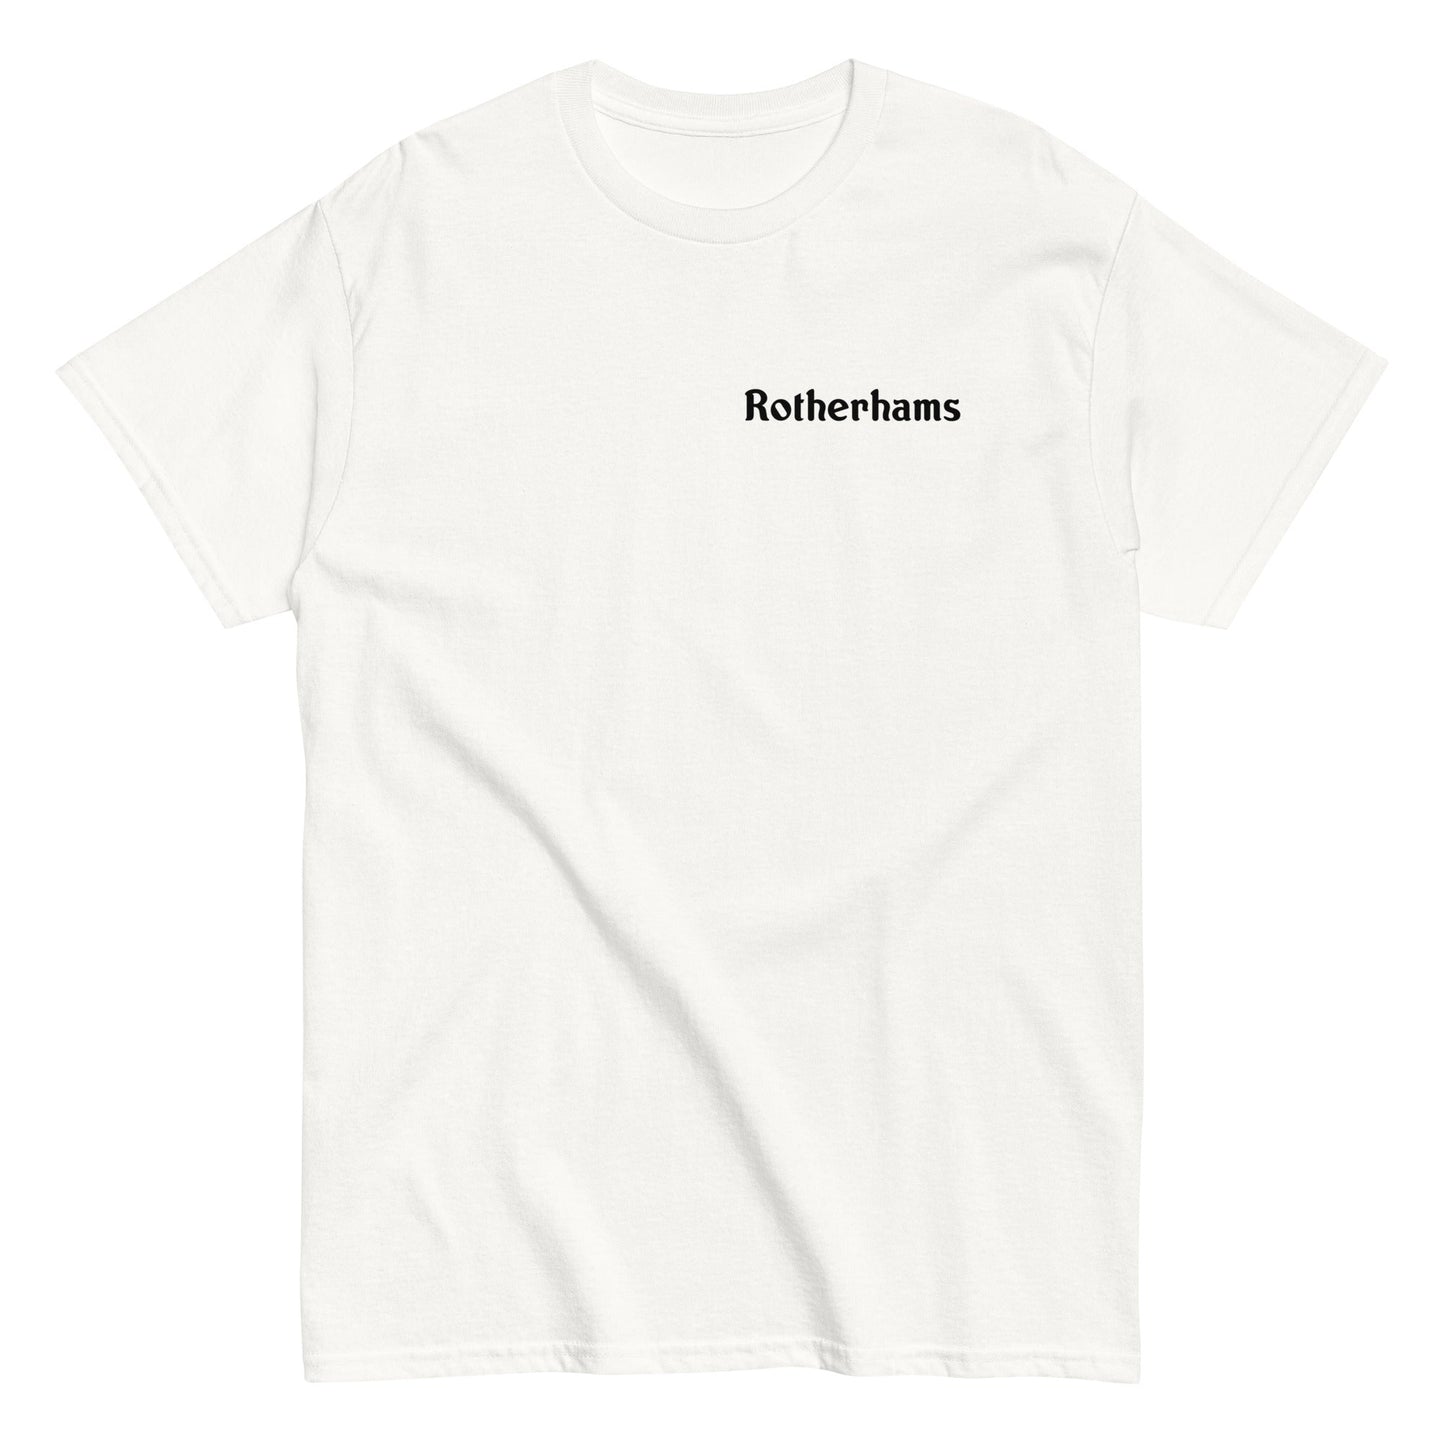 Classic Road Racing Shirt - Rotherhams